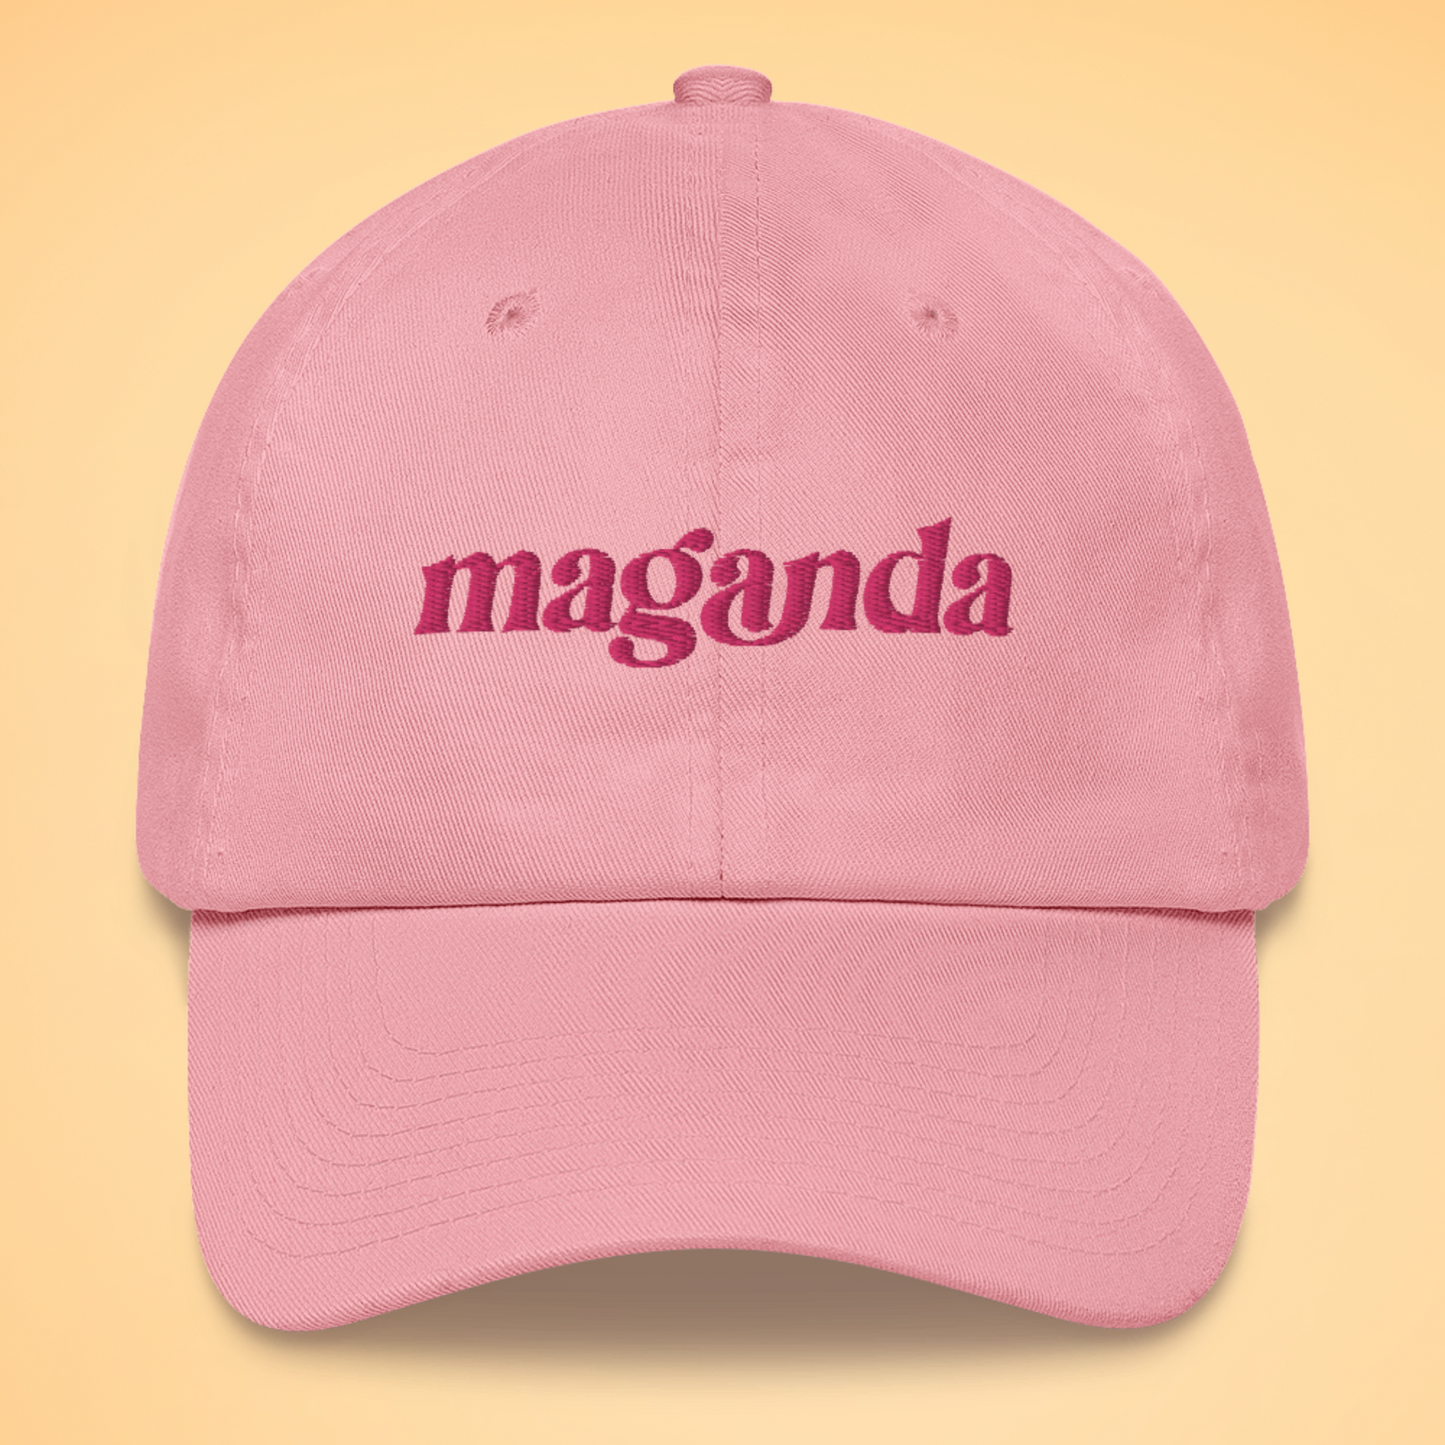 Filipino Maganda Embroidered Cotton Baseball Cap in Pink